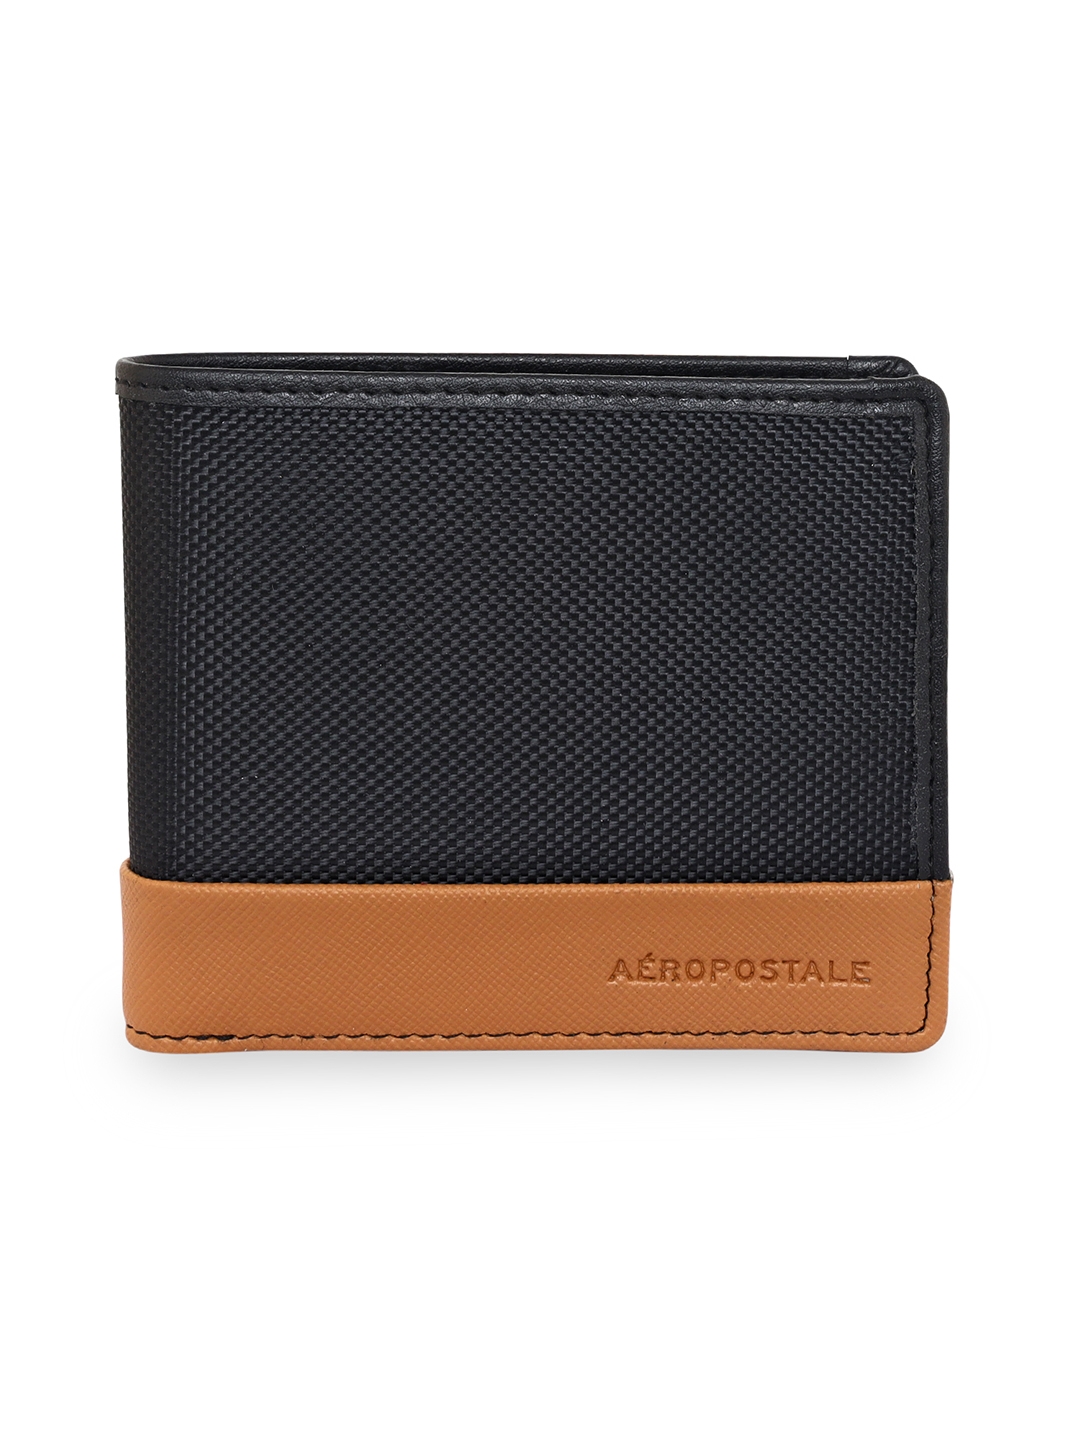 Aeropostale | Aeropostale Leo Men's Wallet Slim Fit Vegan Leather (Black and Tan)